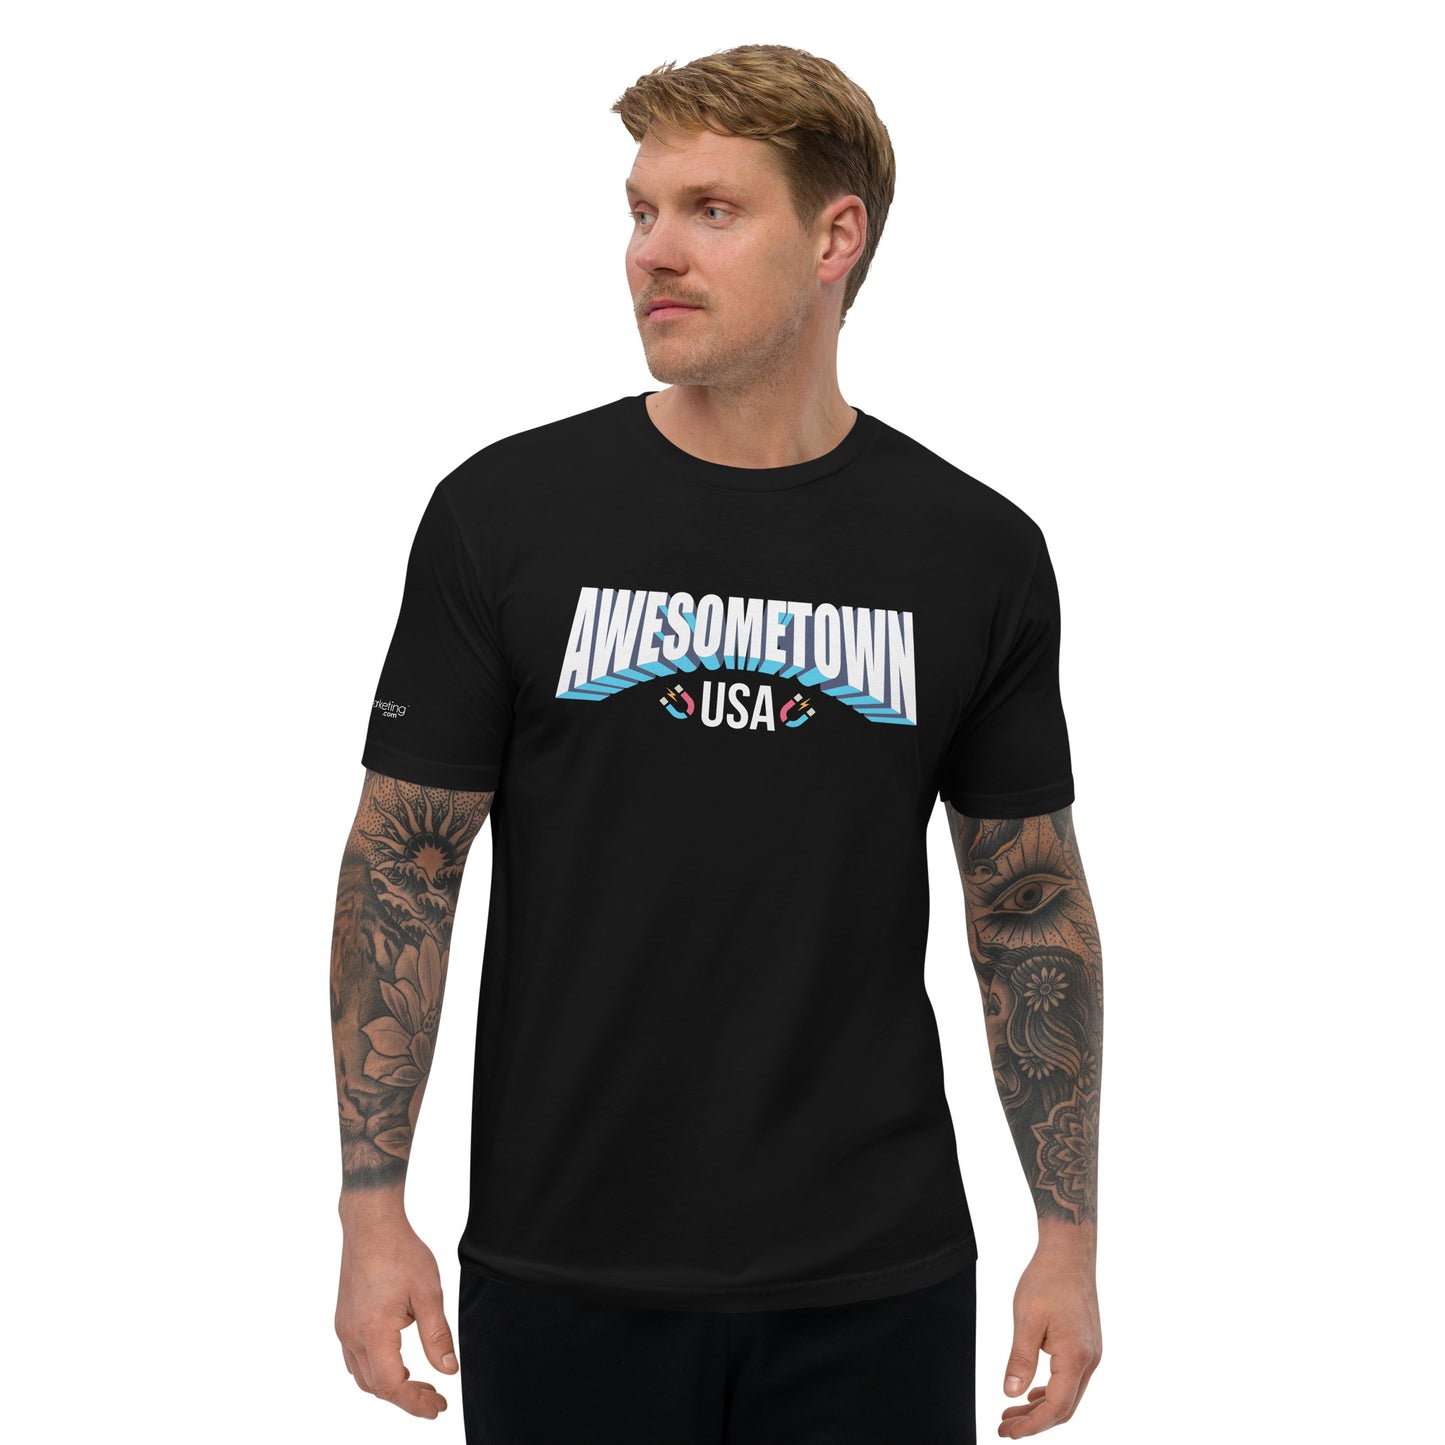 Awesometown USA T-Shirt (Unisex)